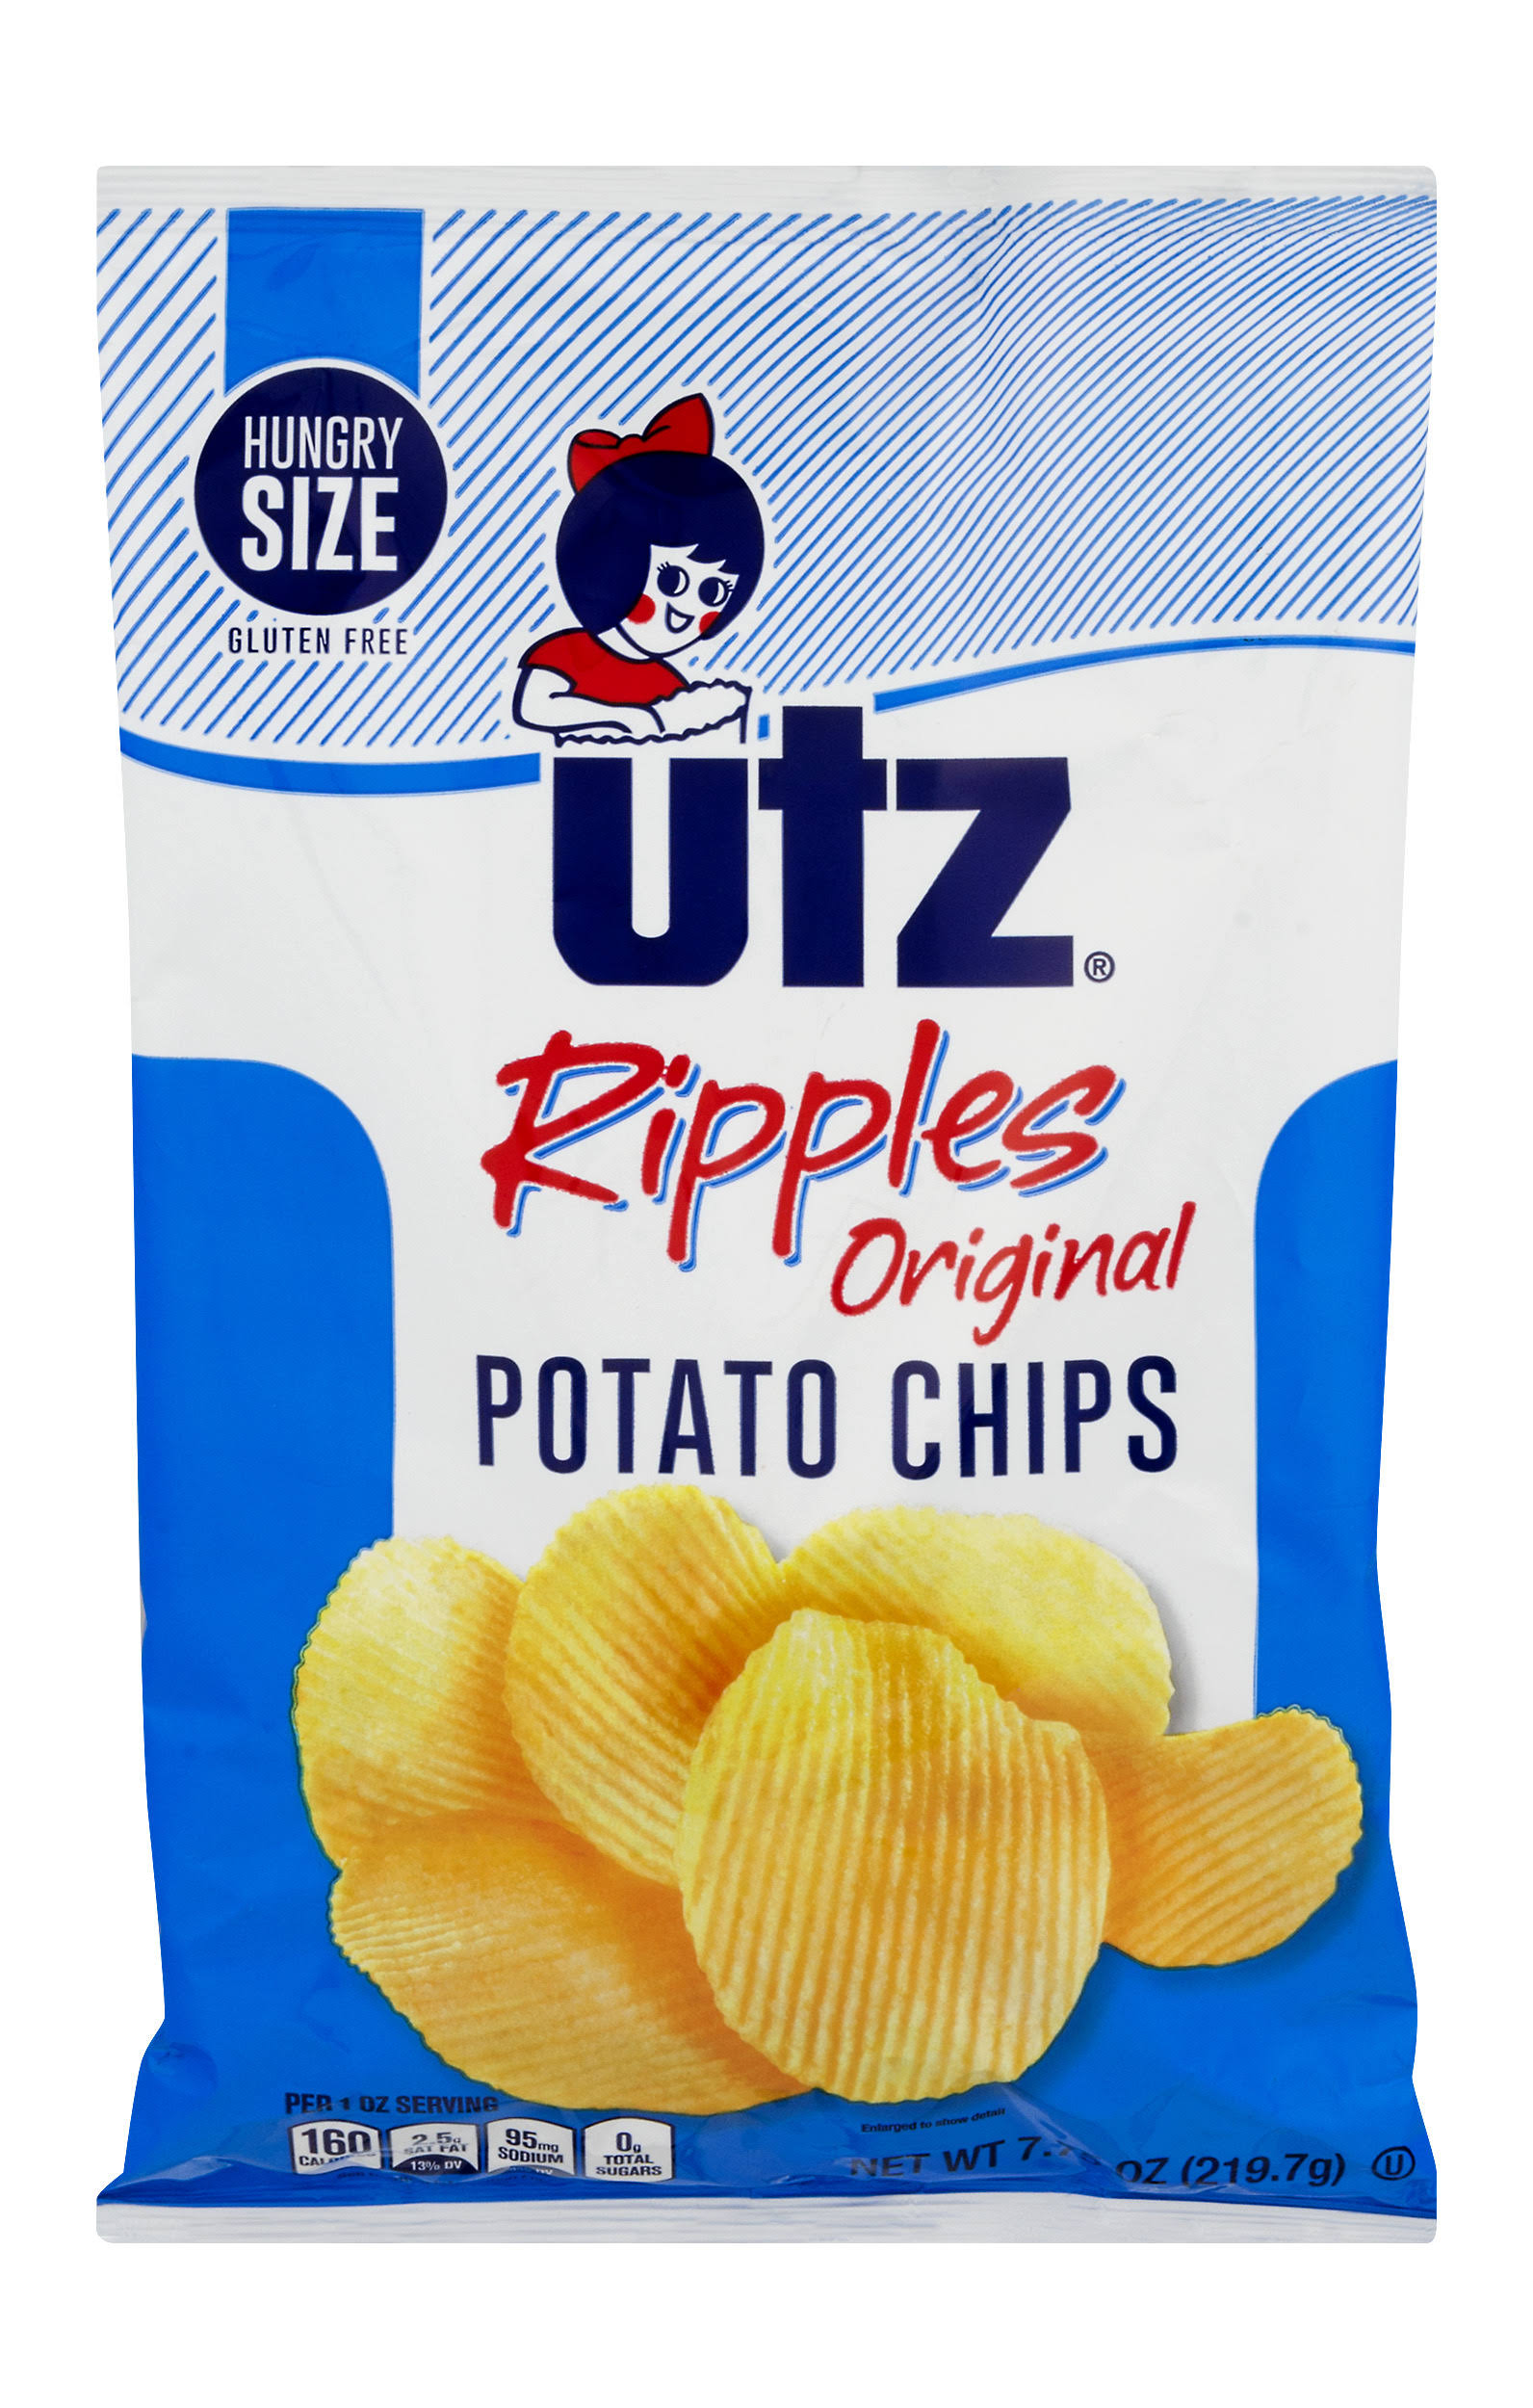 Utz Ripples Potato Chips, Original, Hungry Size - 7.75 oz